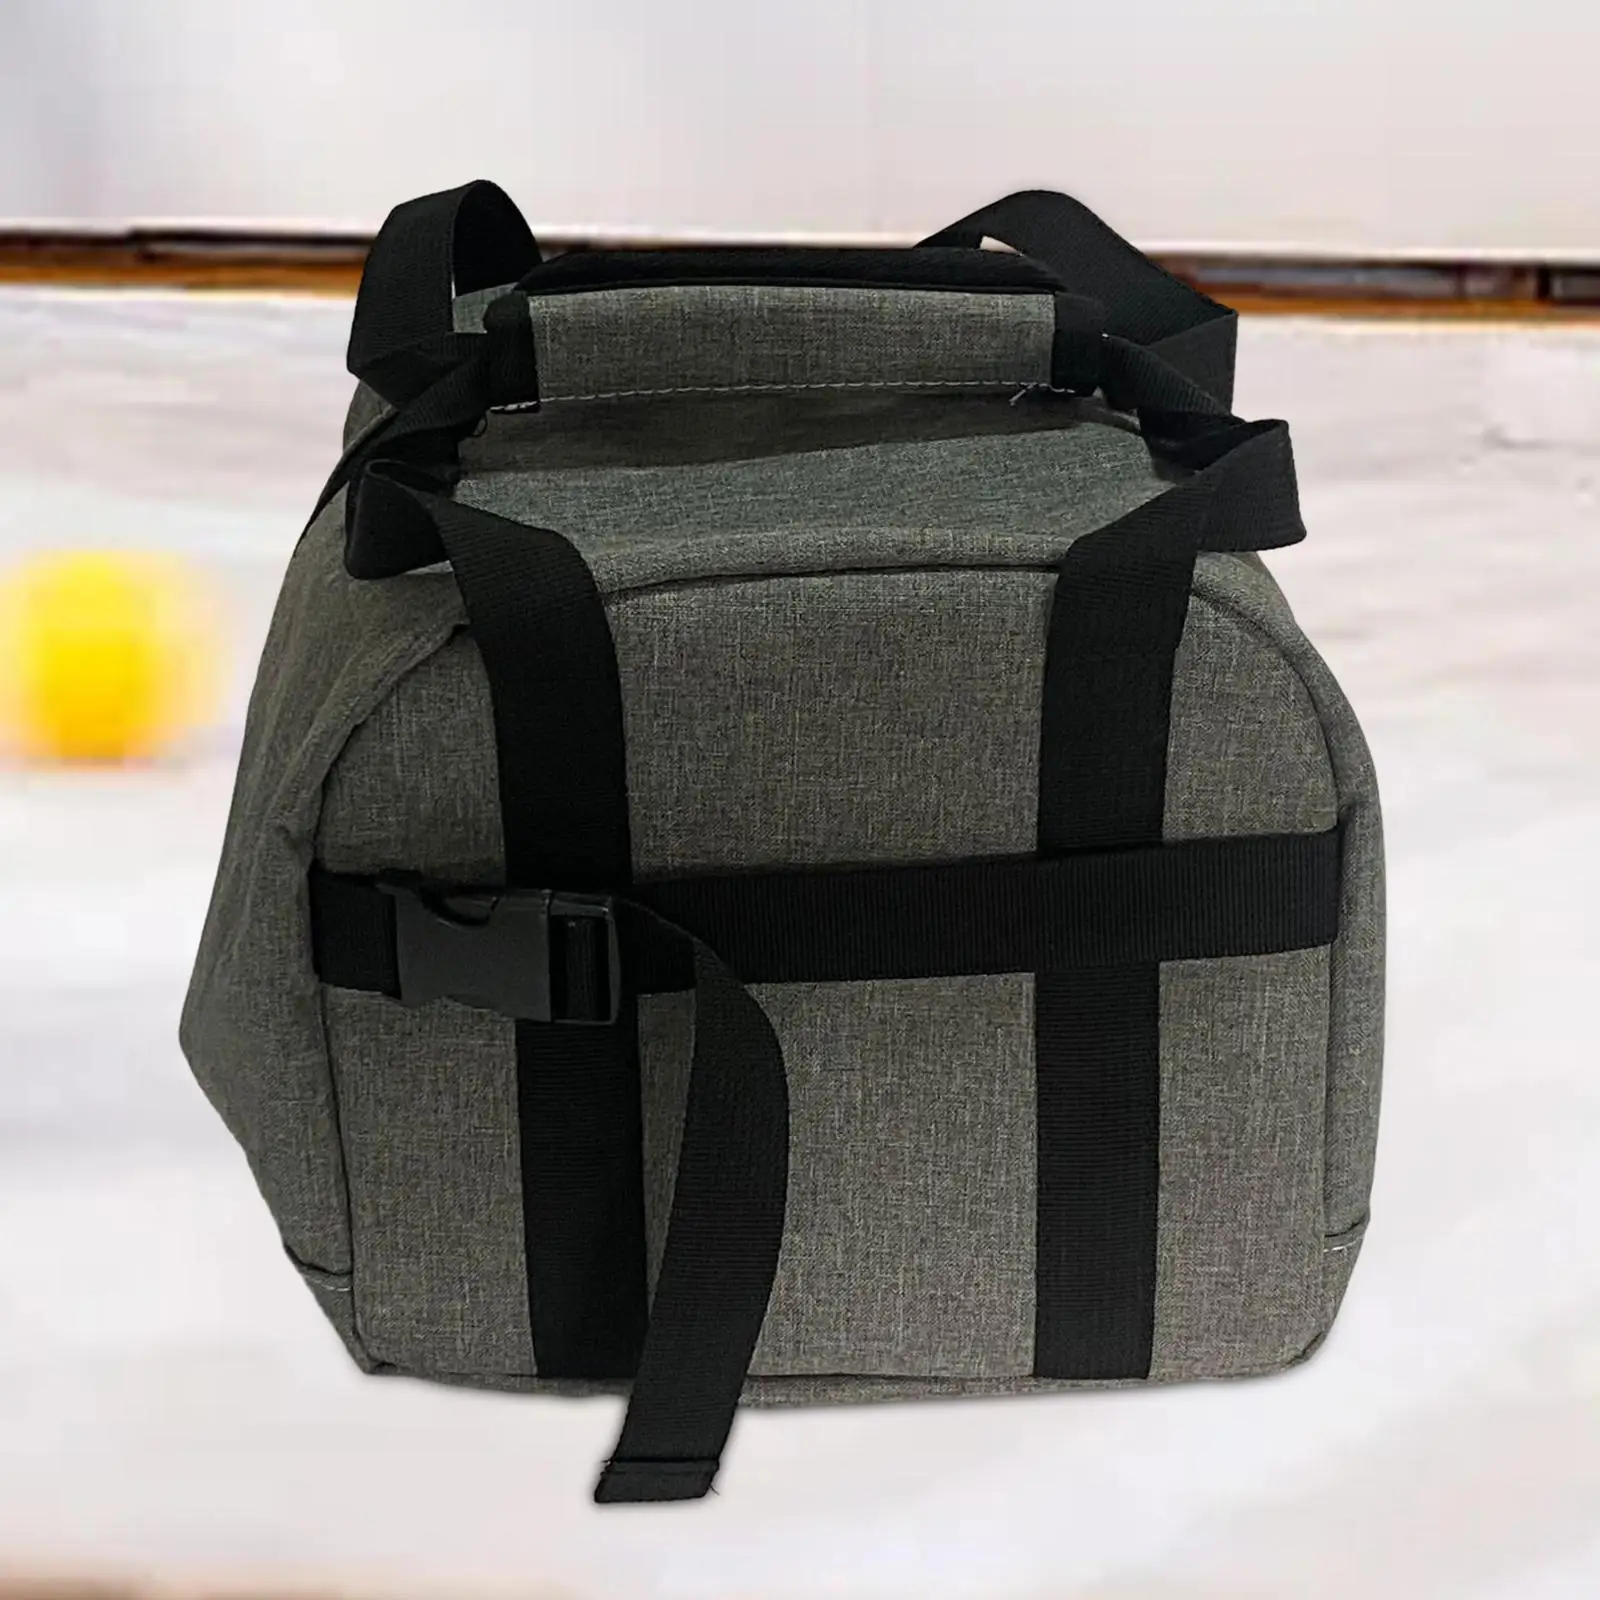 Single Bowling Ball Bag Durable Double Zipper Compact Easy to Carry with External Mesh Pocket Oxford Cloth Handbag for Women Men